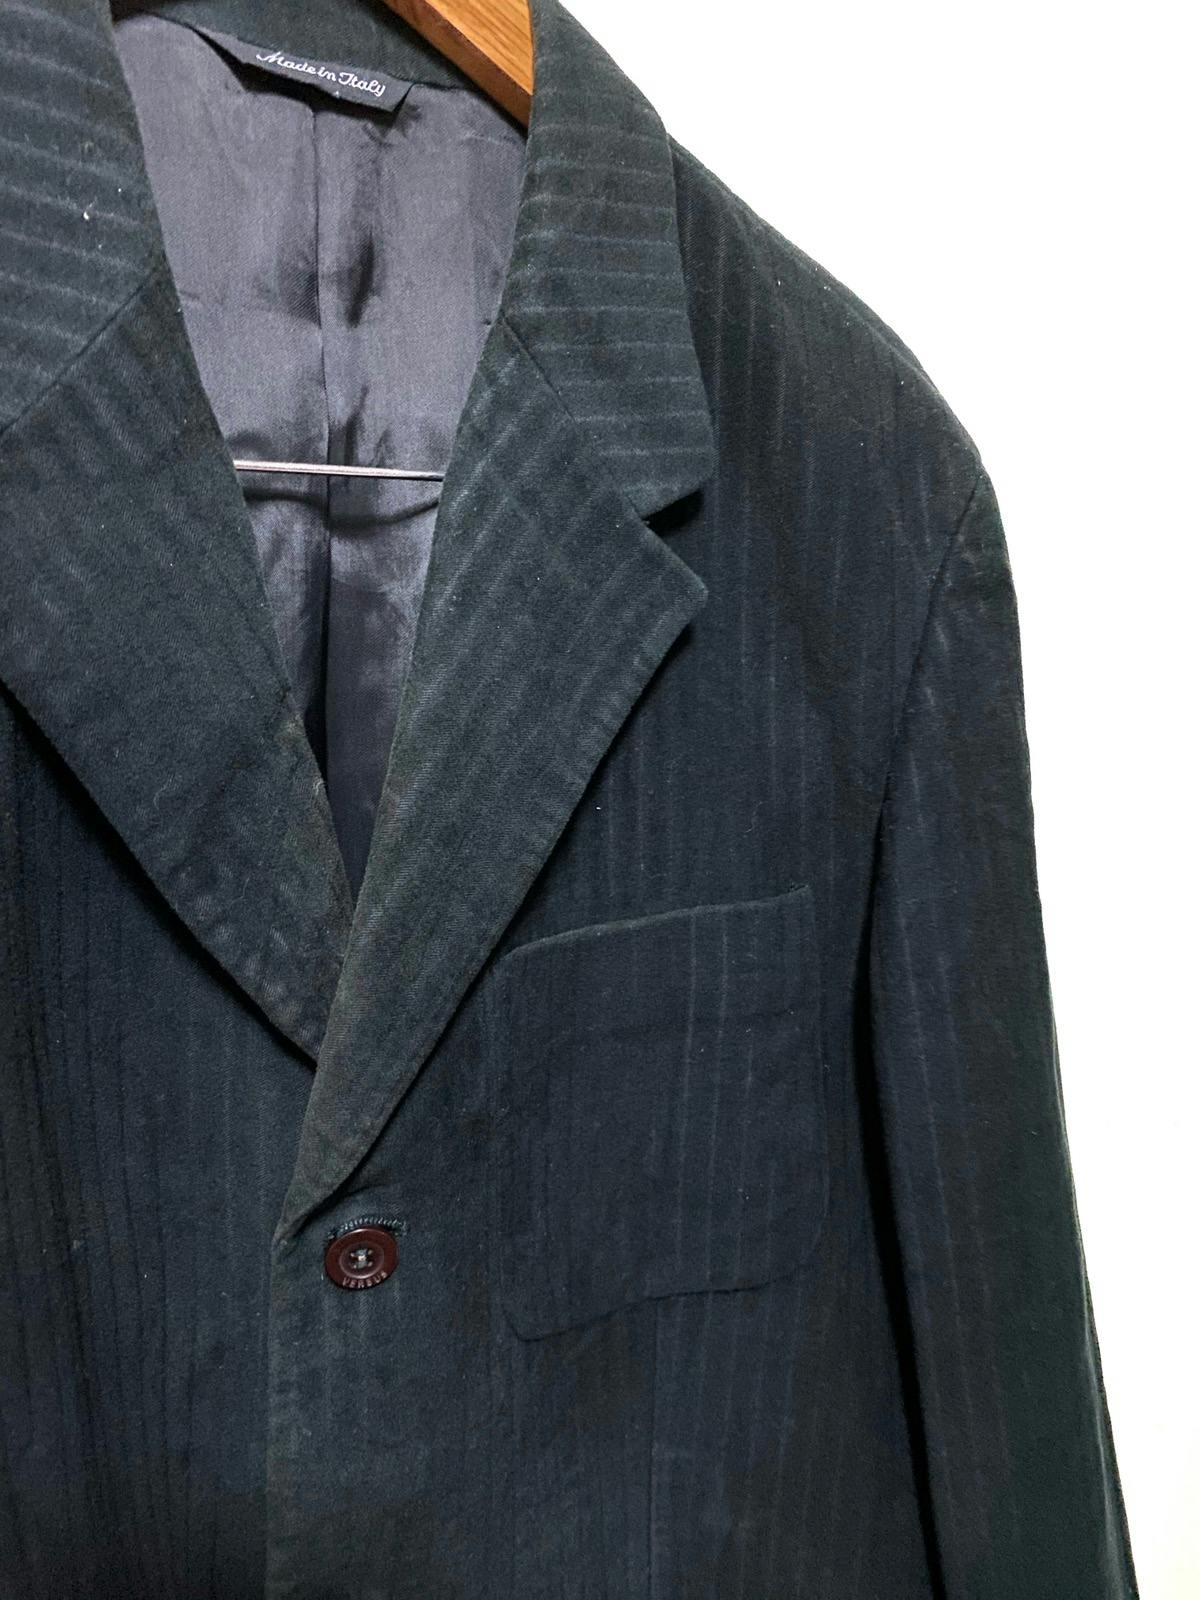 Vintage Versus Gianni Versace Jacket Blazer - 6